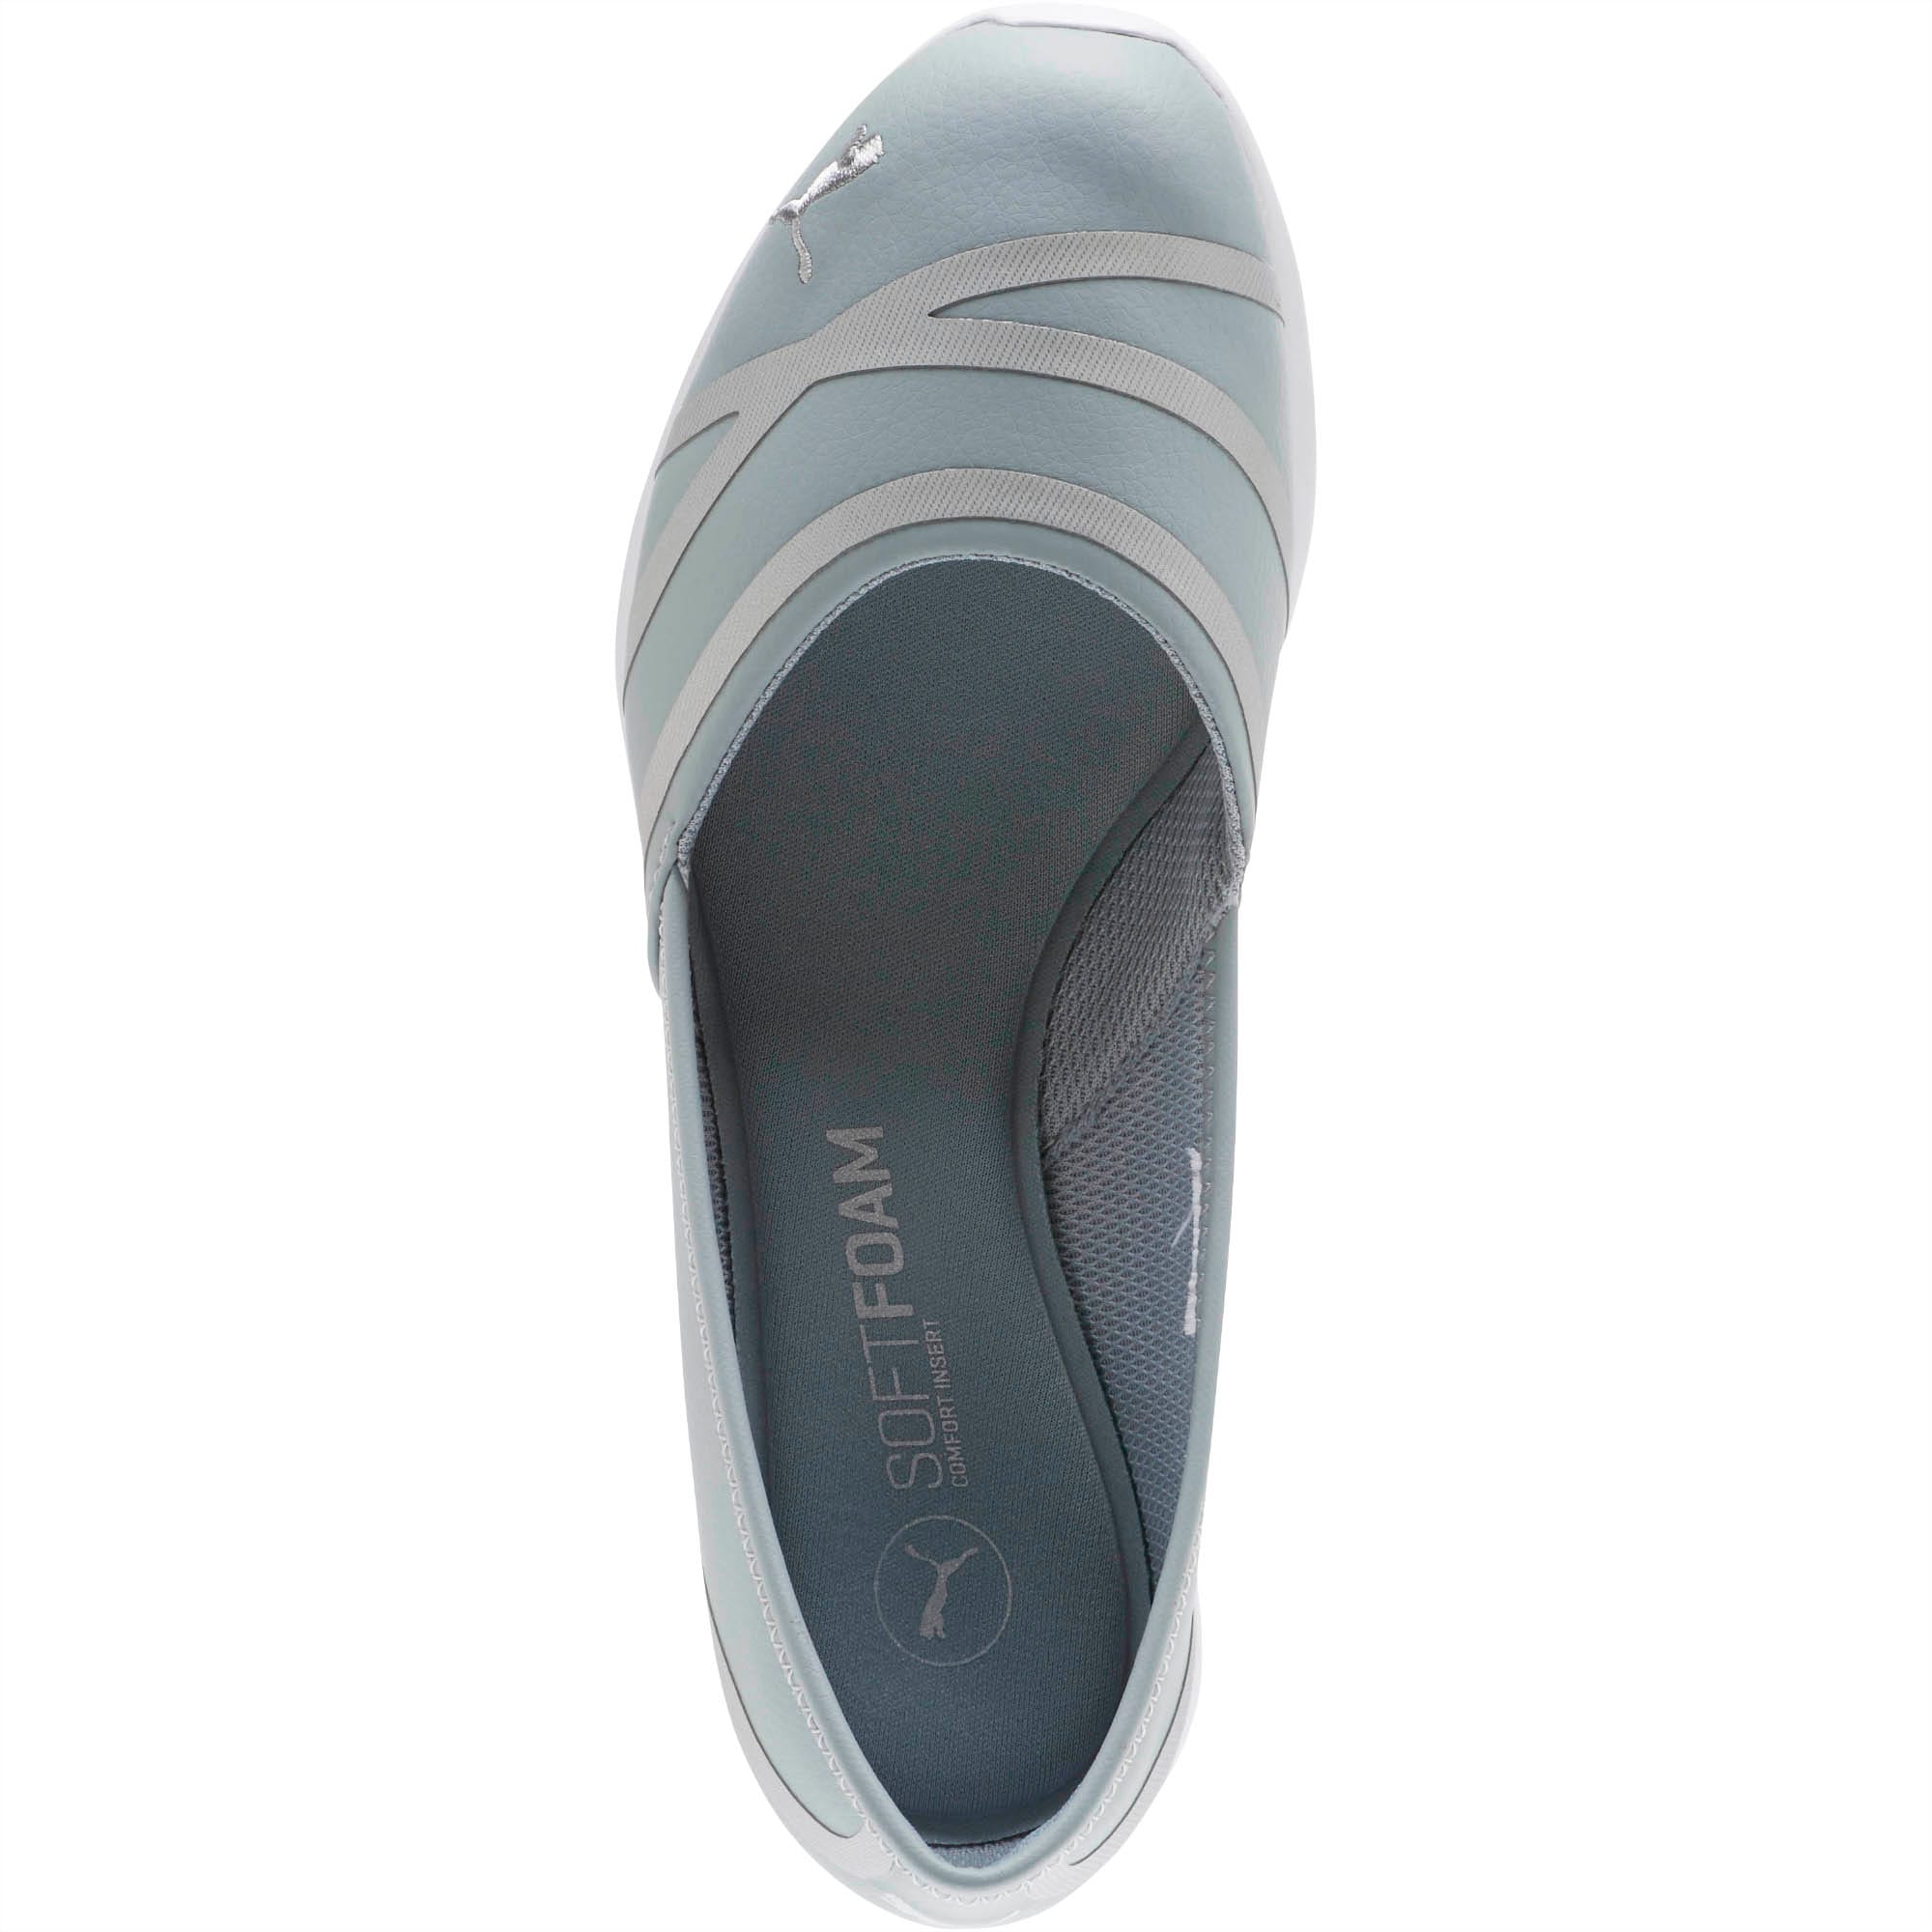 puma ballet shoes with soft foam